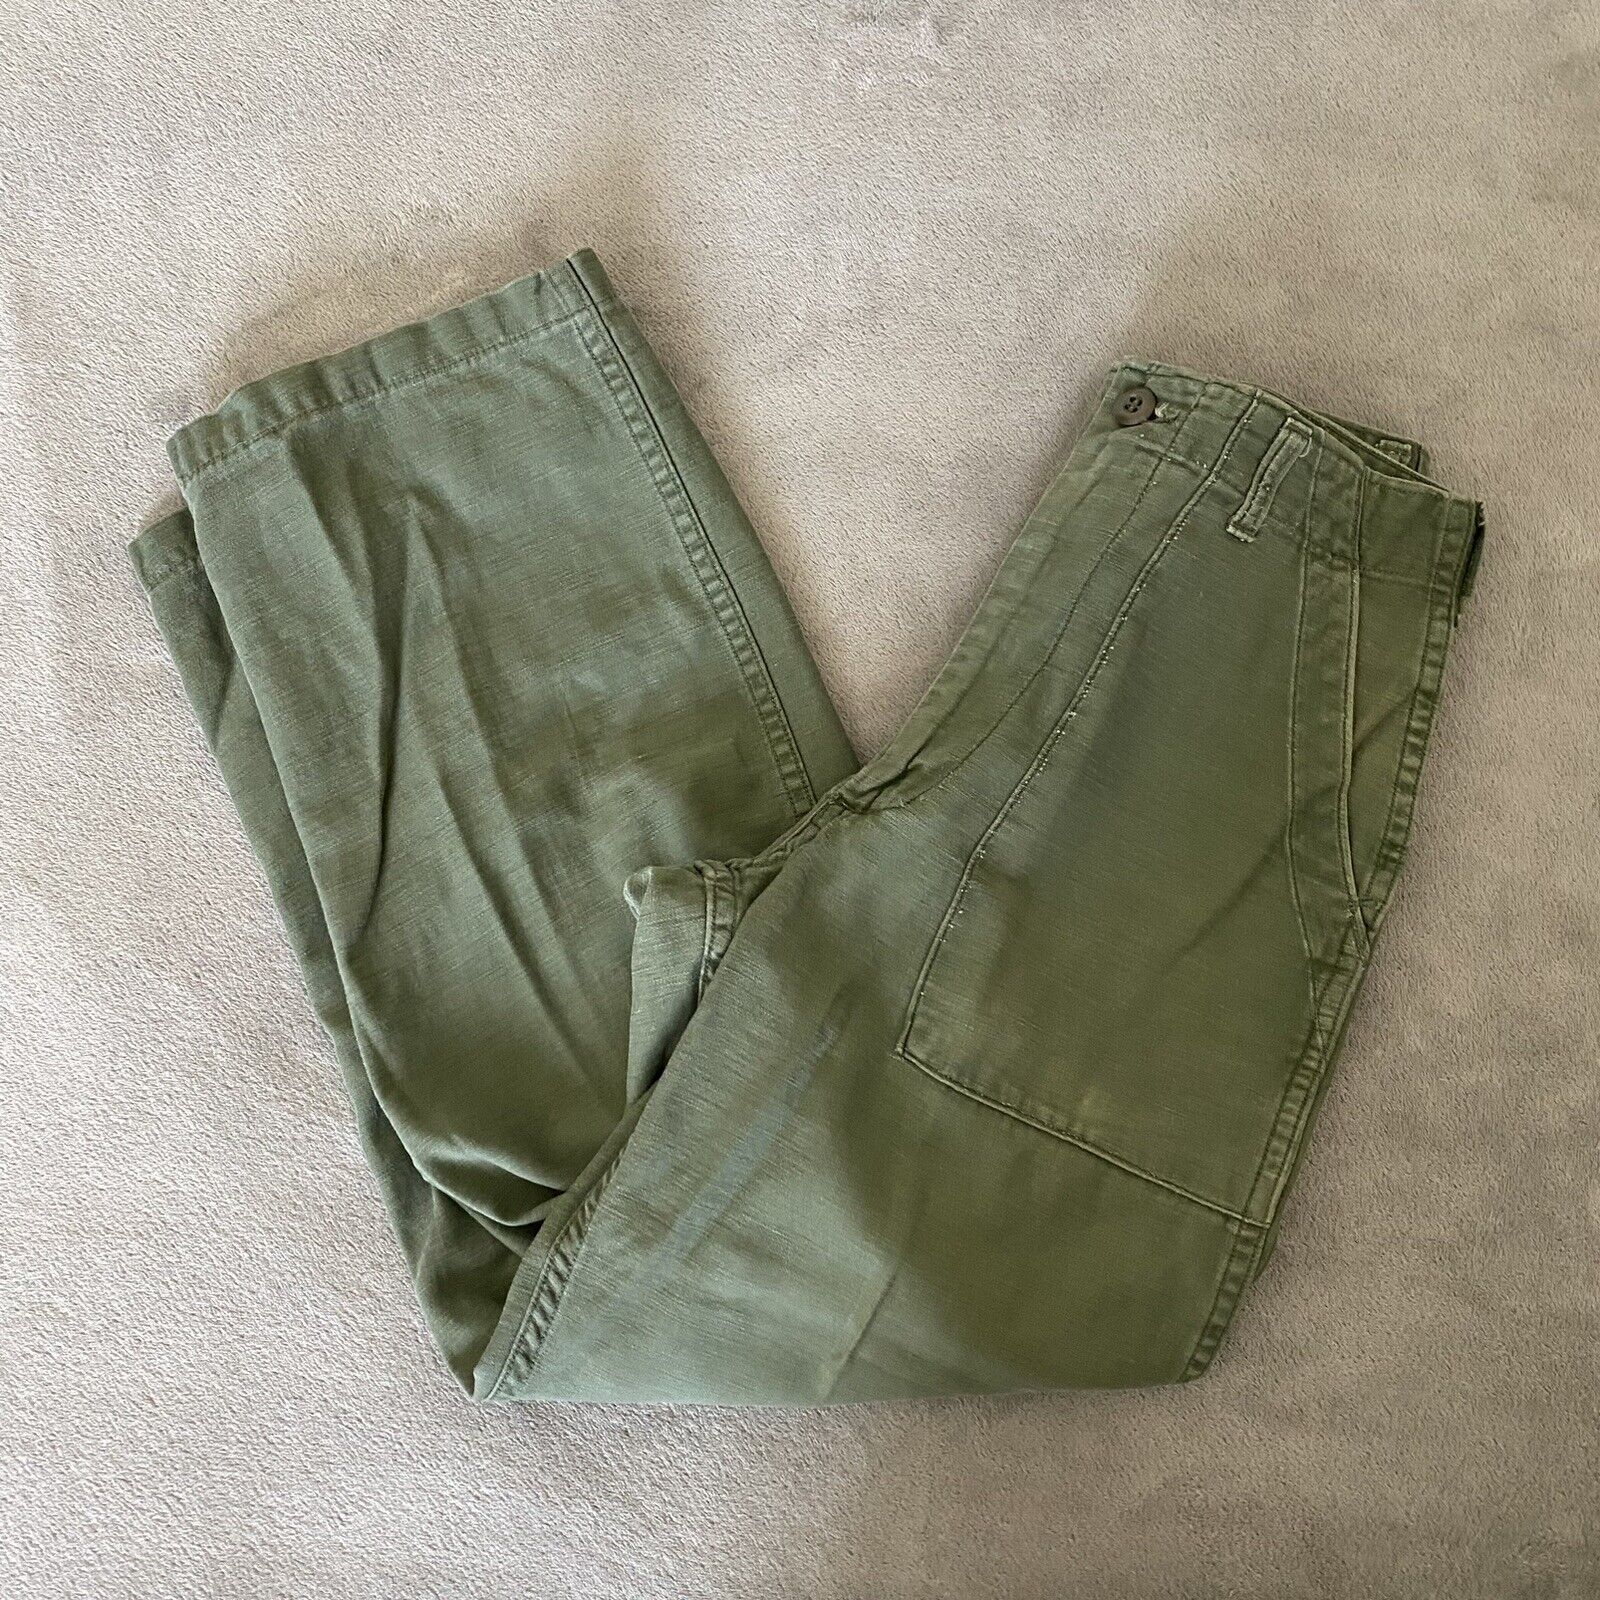 1960s Vietnam War Era US Army Cotton Sateen TROUSERS Pants OG-107 Type 1 28x26